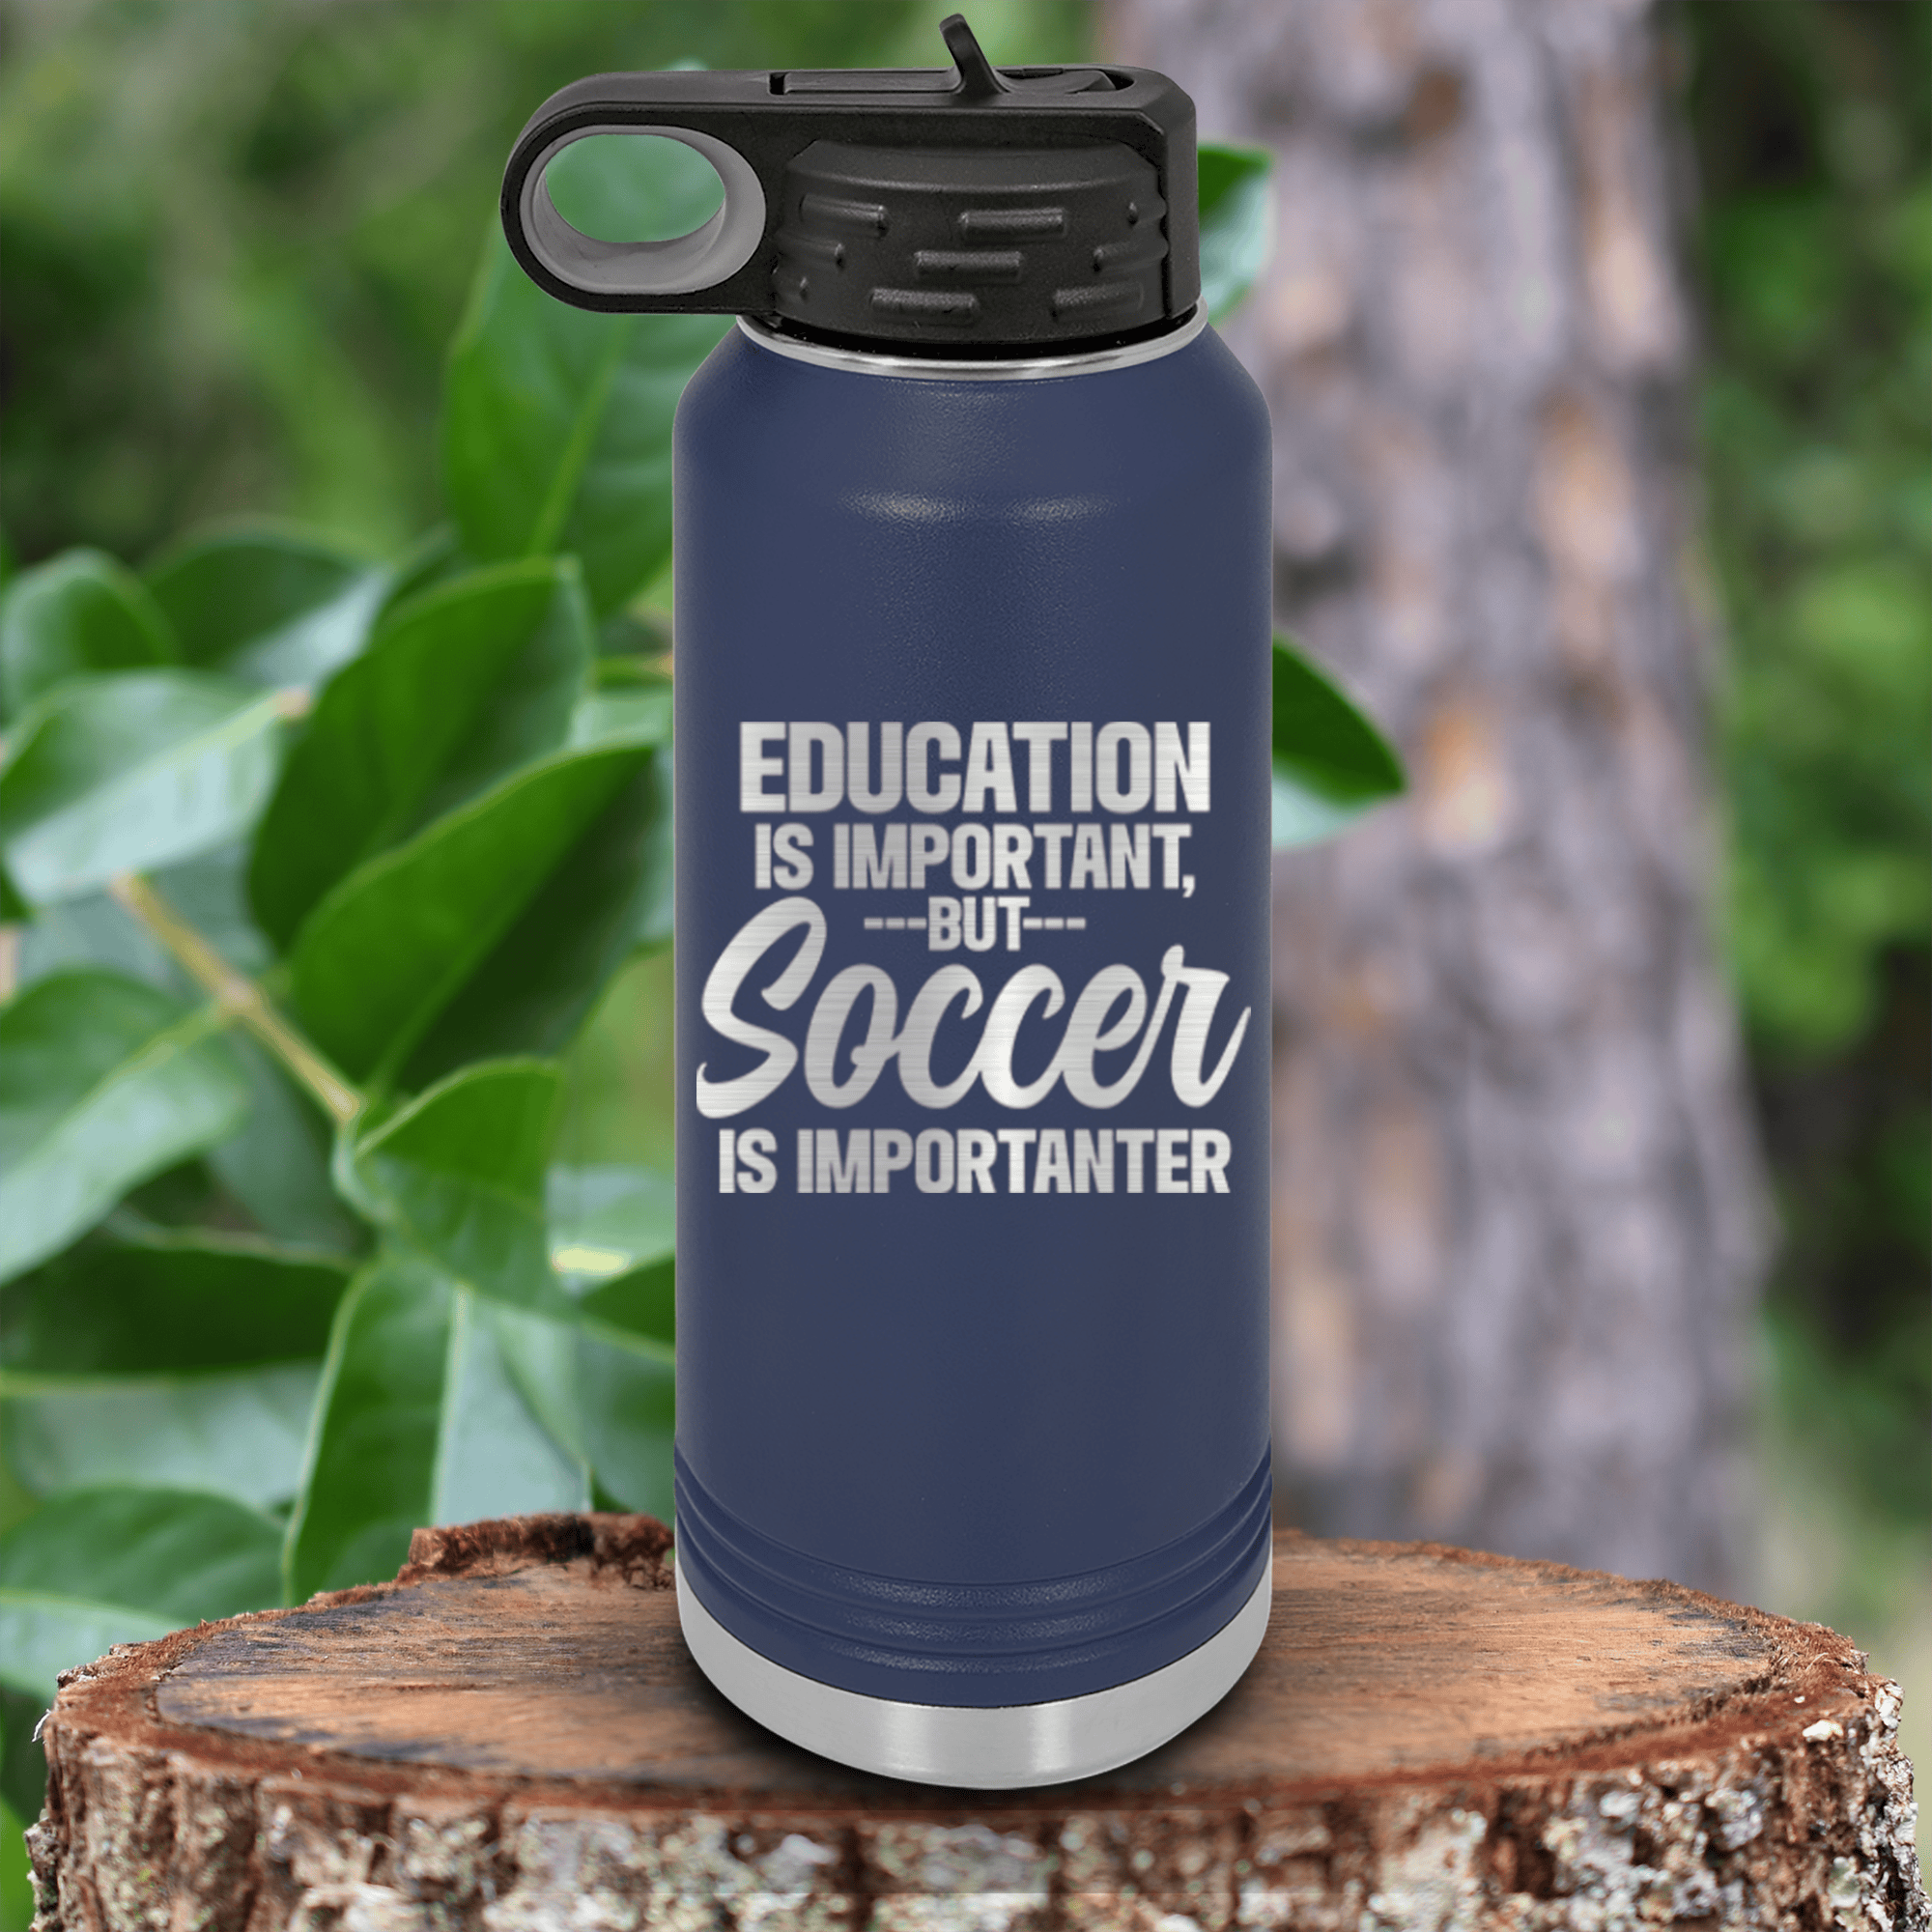 Navy Soccer Water Bottle With Prioritizing Soccer Design